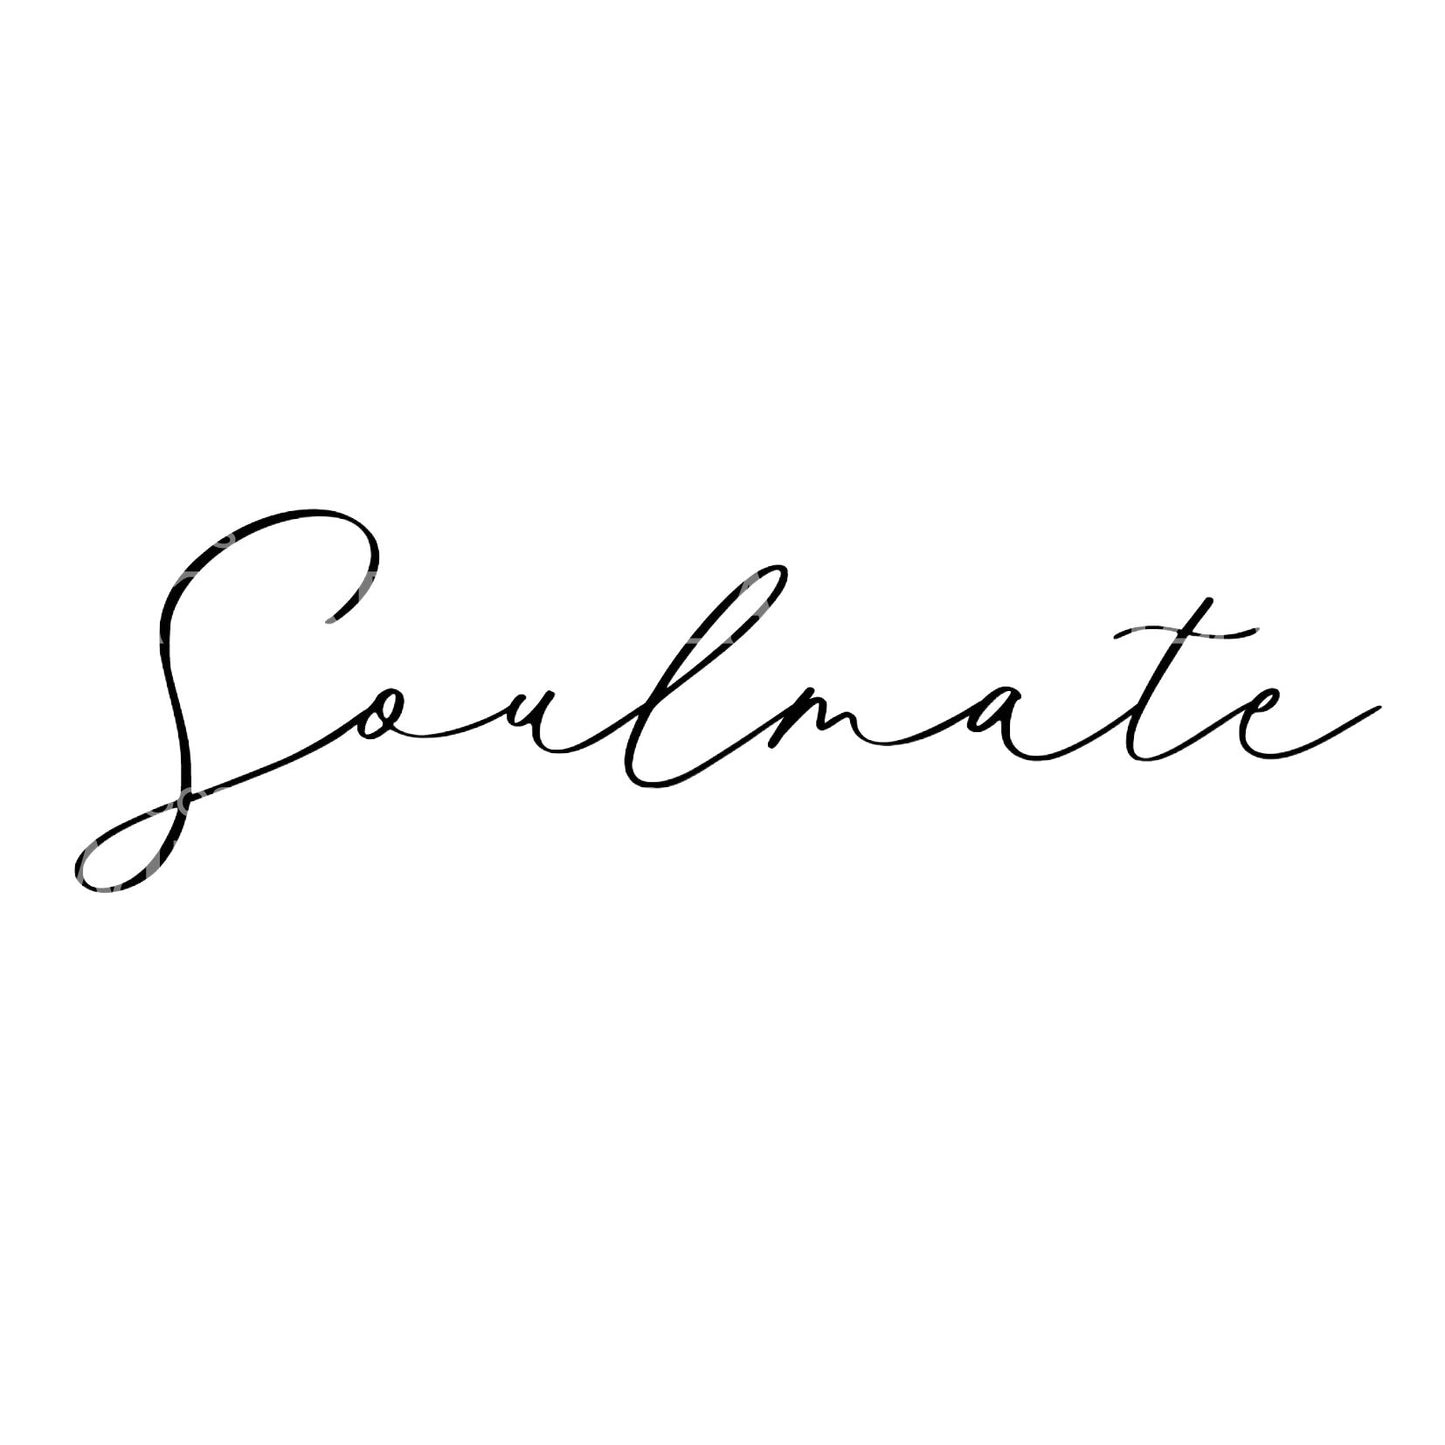 Soulmate Lettering Fineline Tattoo Design